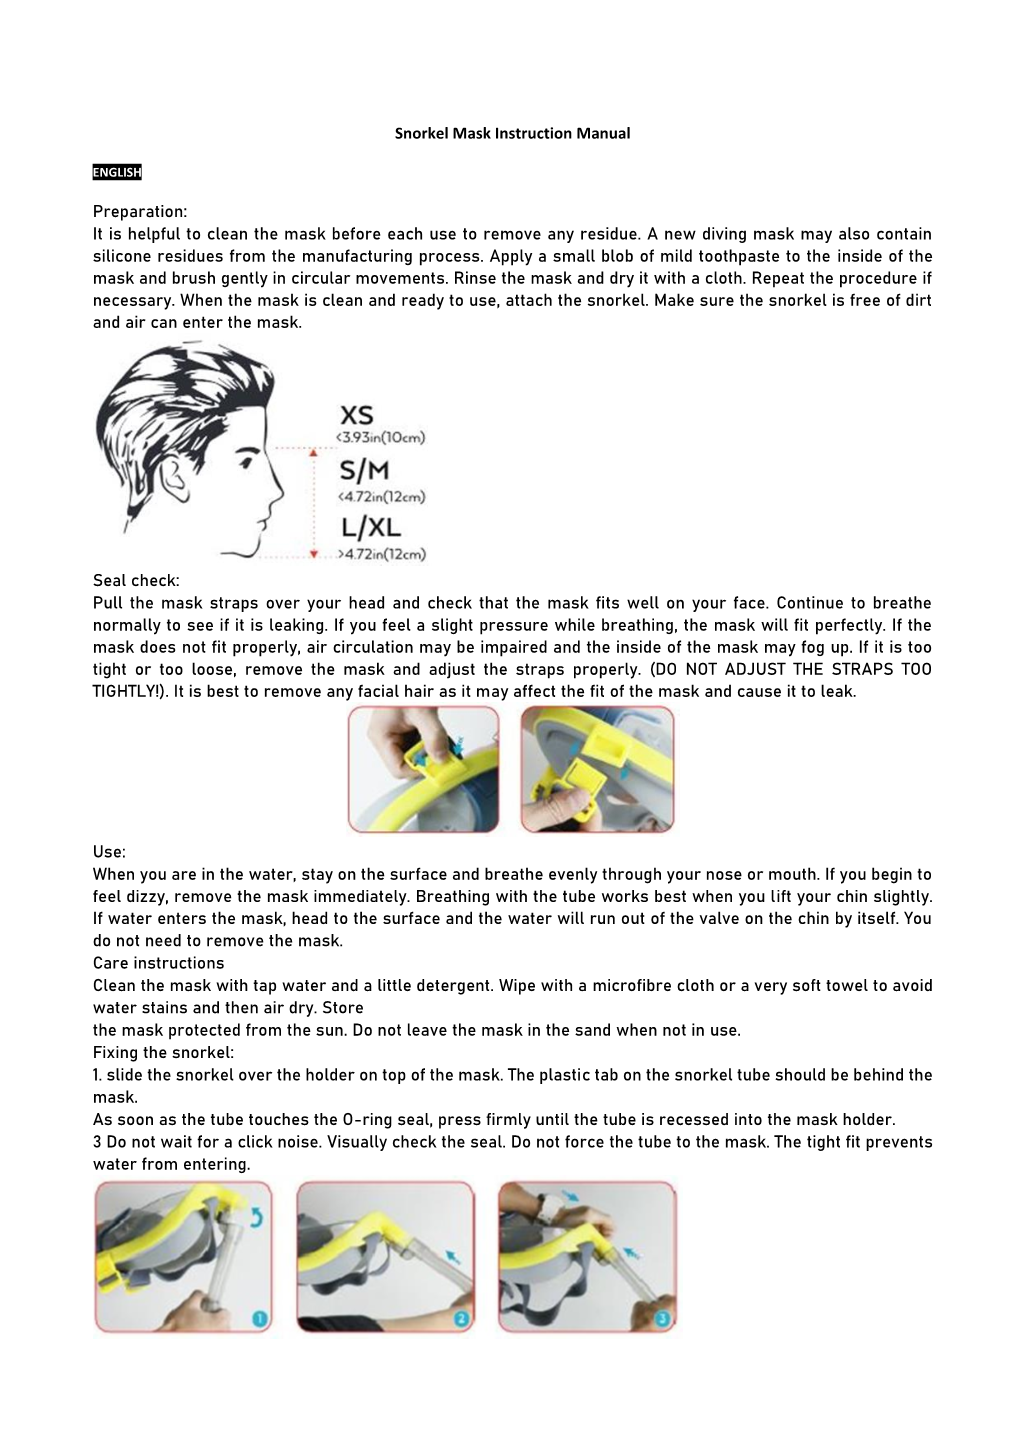 Snorkel Mask Instruction Manual Preparation